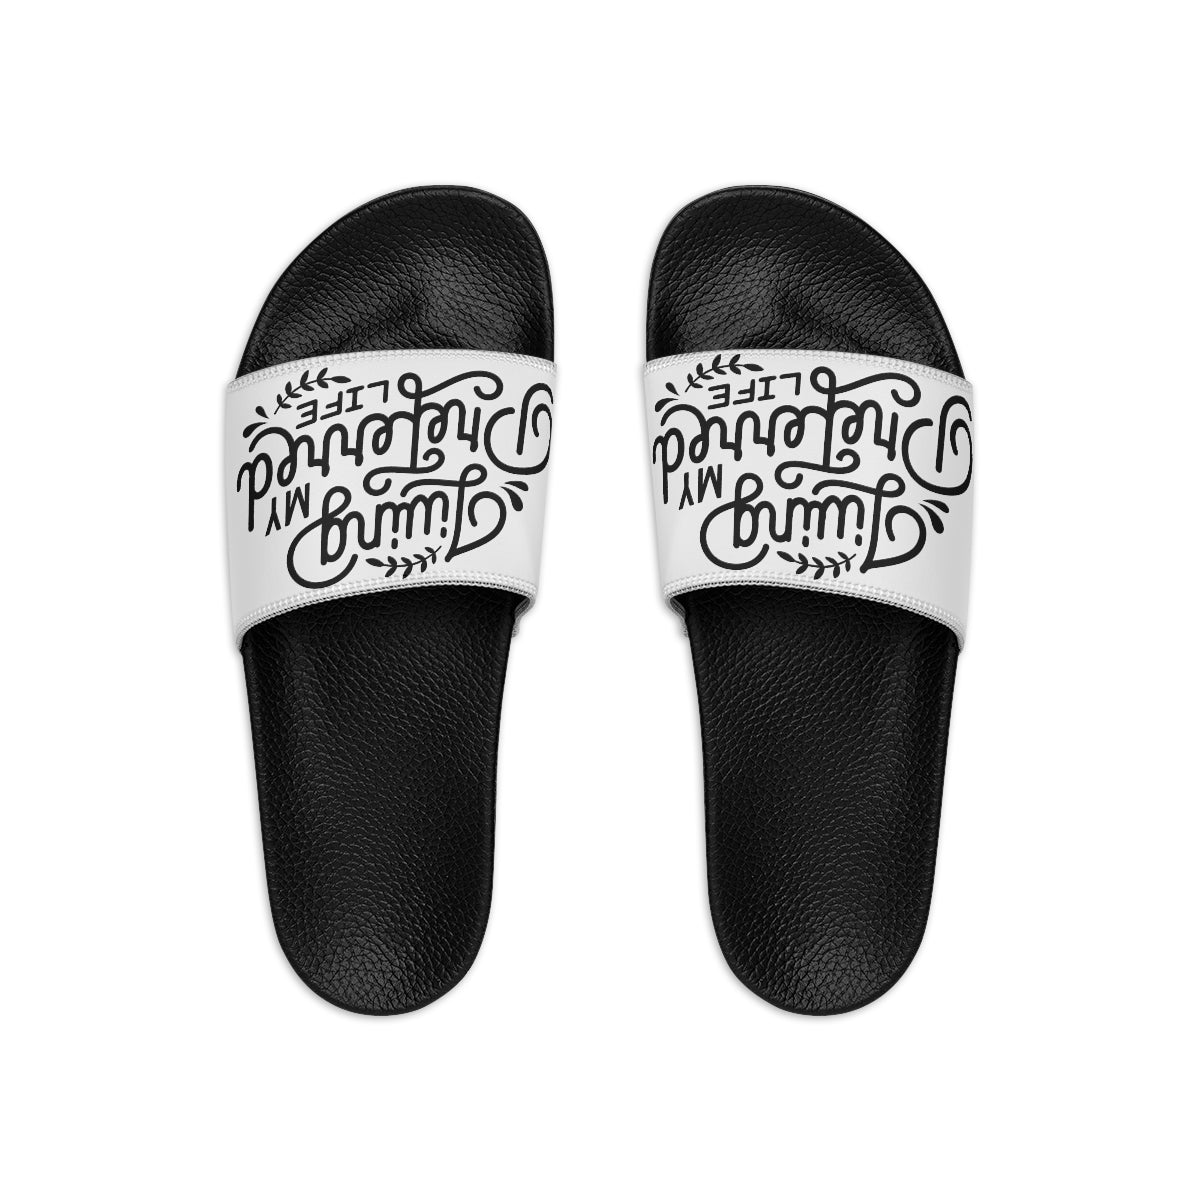 Client's Living My Preferred Life - Men's Slide Sandals